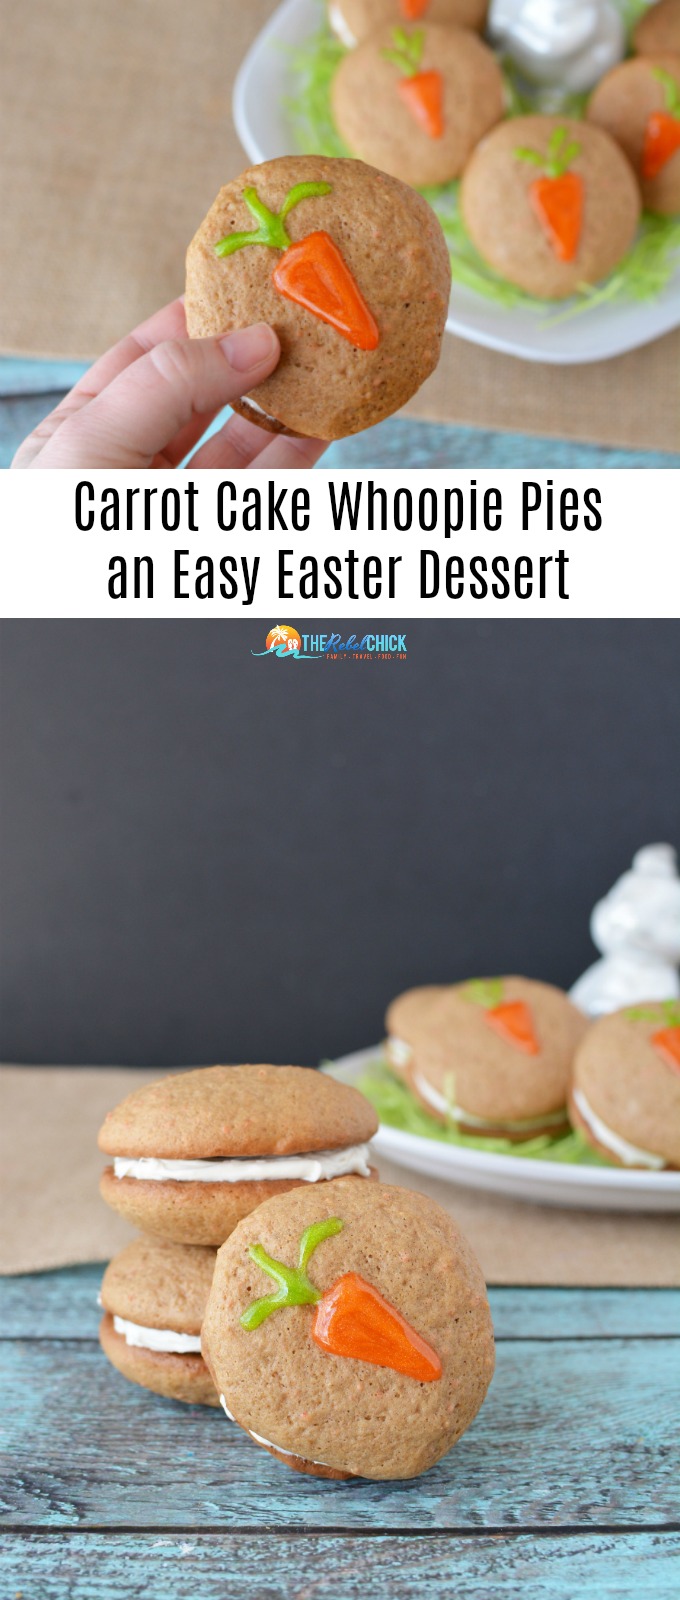 Carrot Cake Whoopie Pies Recipe